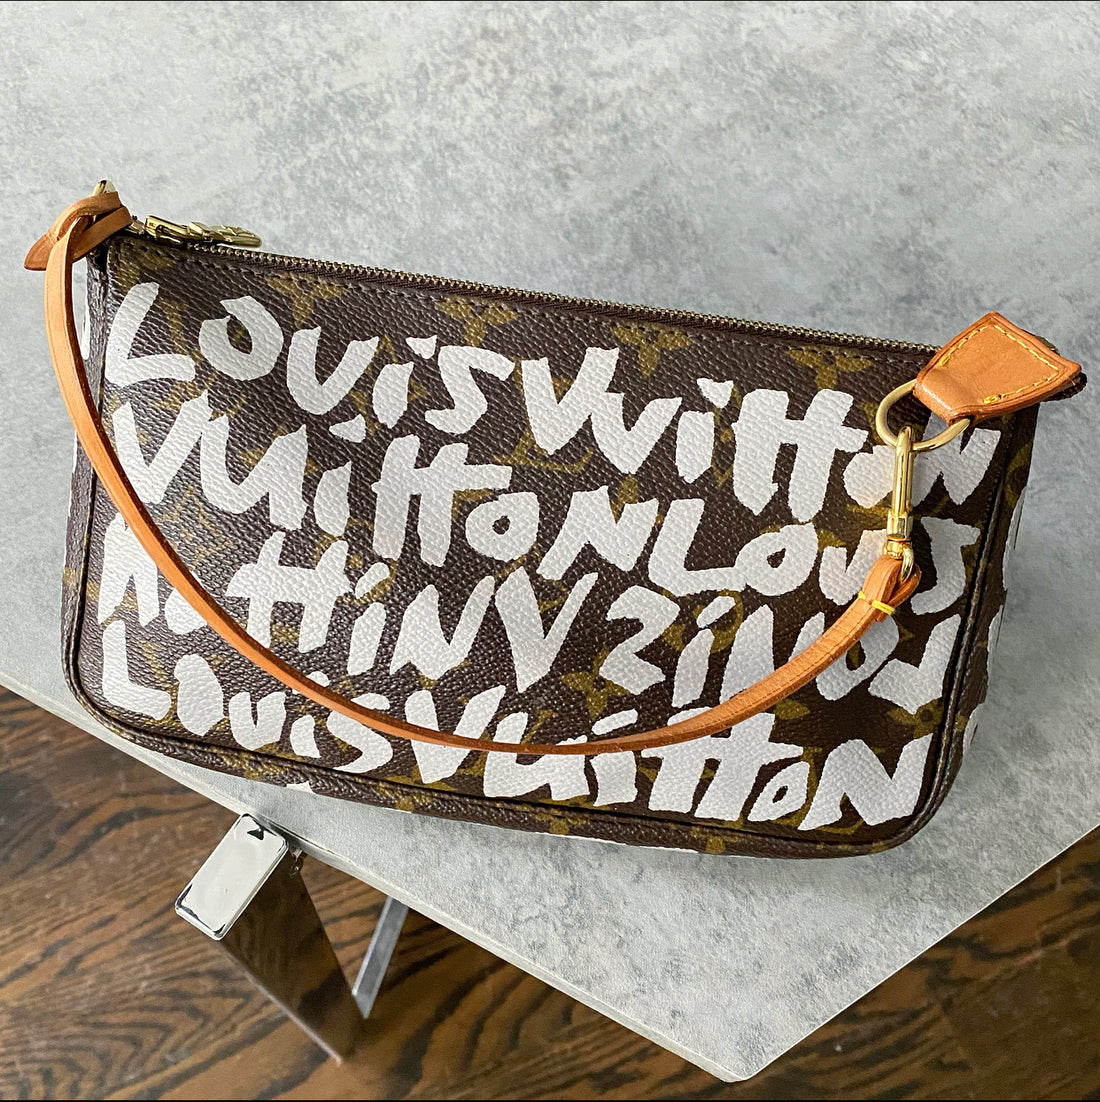 Louis Vuitton Stephen Sprouse Limited Edition Graffiti Pochette Bag